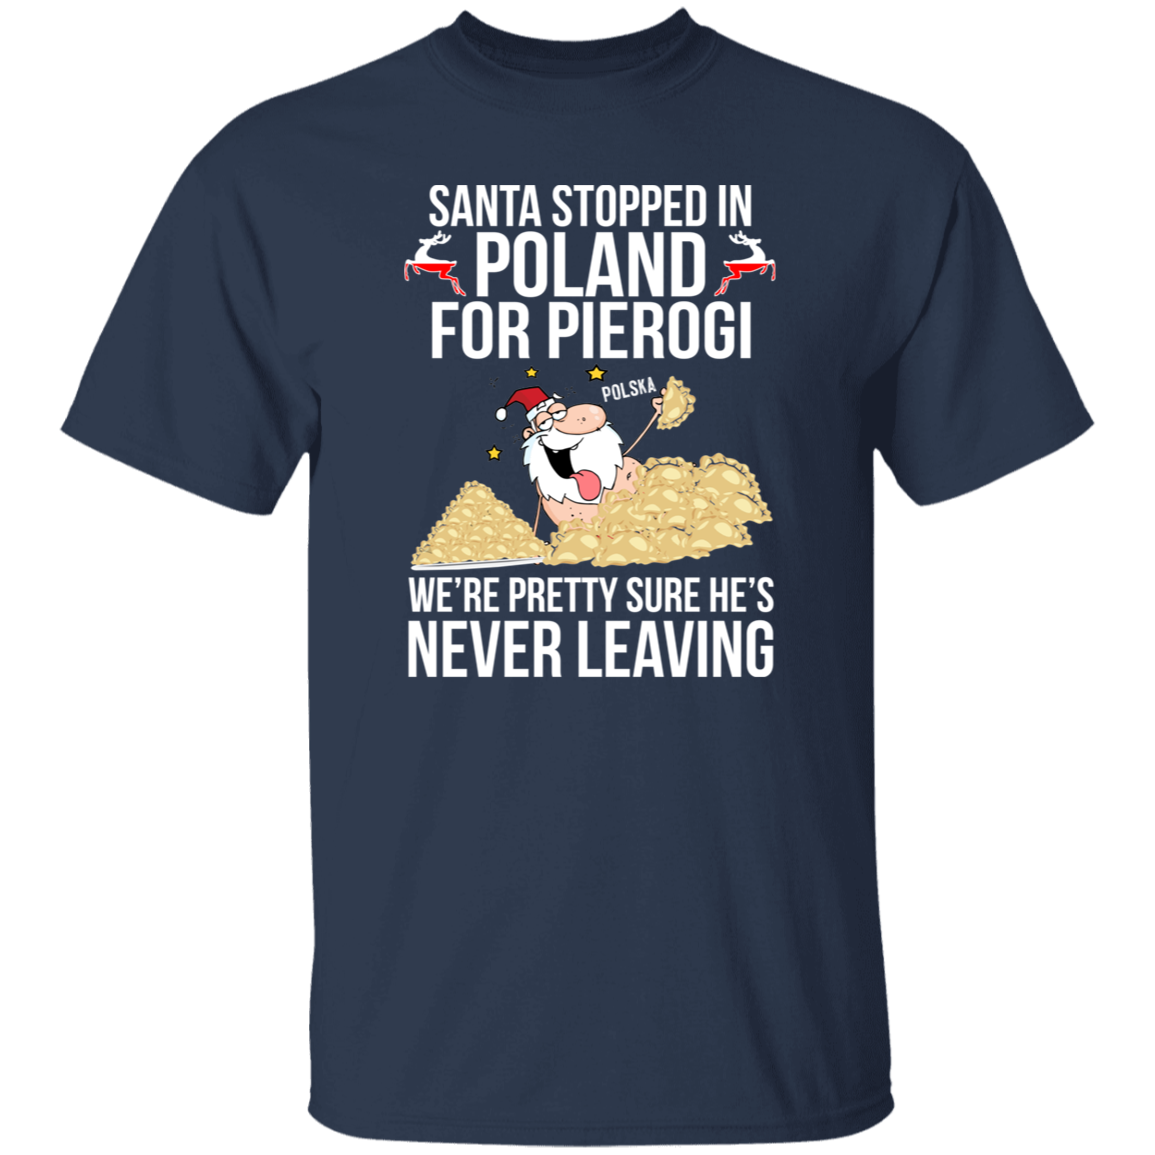 Santa Stopped in Poland for Pierogi Apparel CustomCat G500 5.3 oz. T-Shirt Navy S